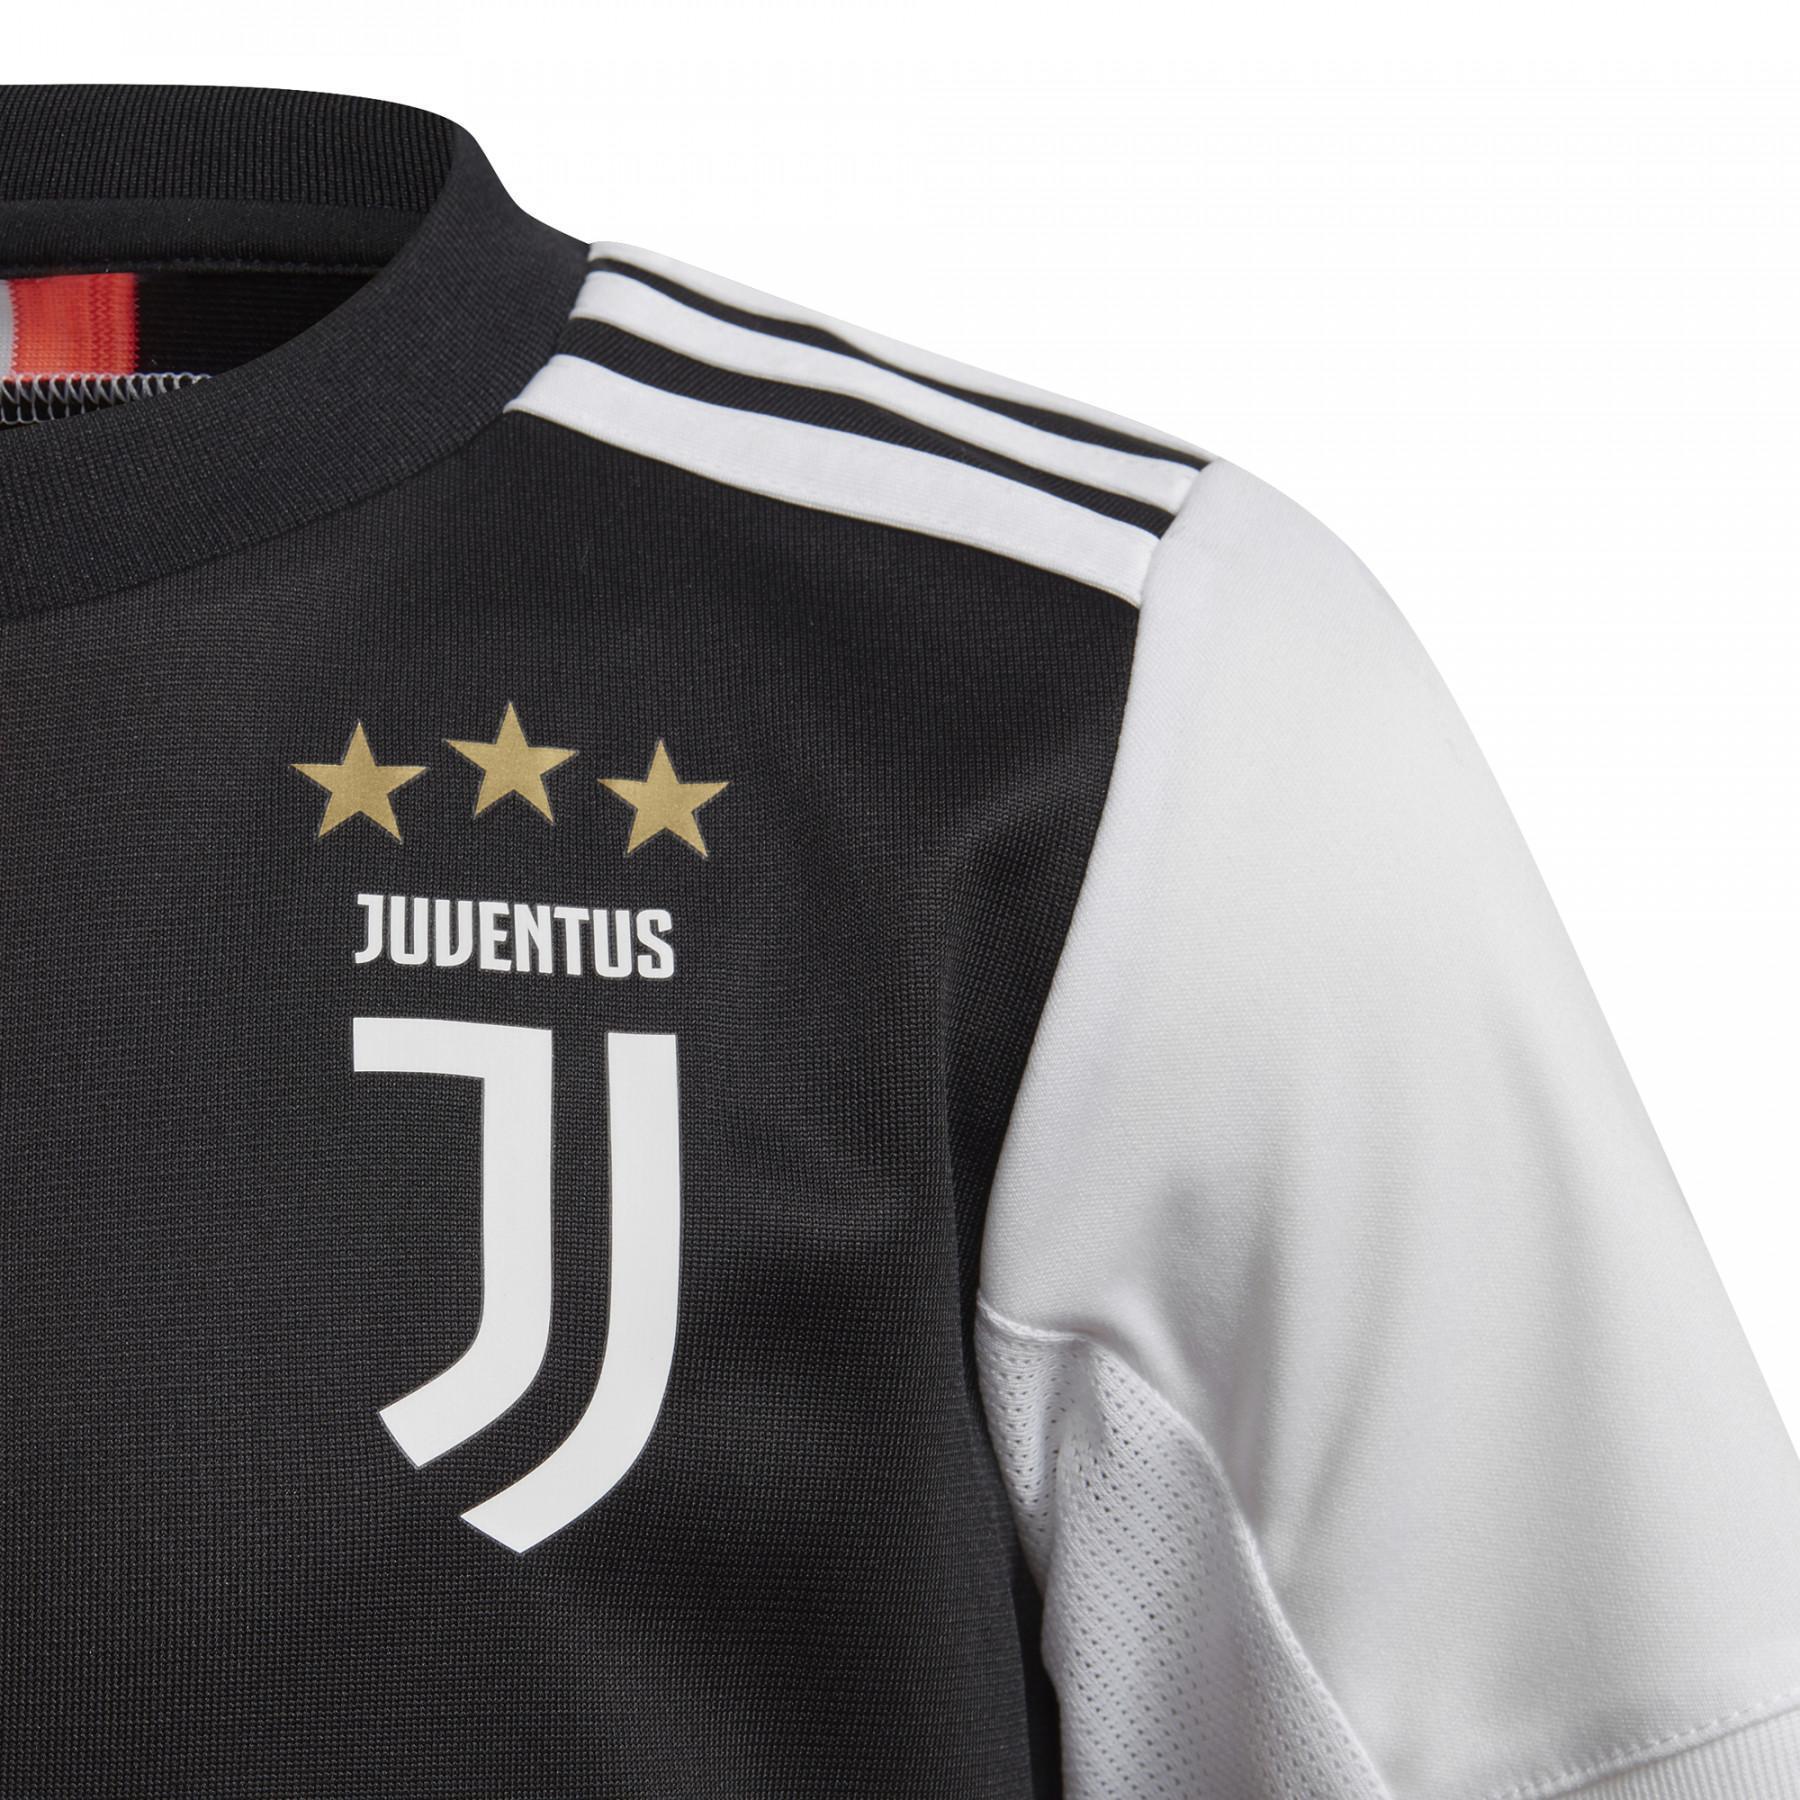 Mini home kit Juventus 2019/20